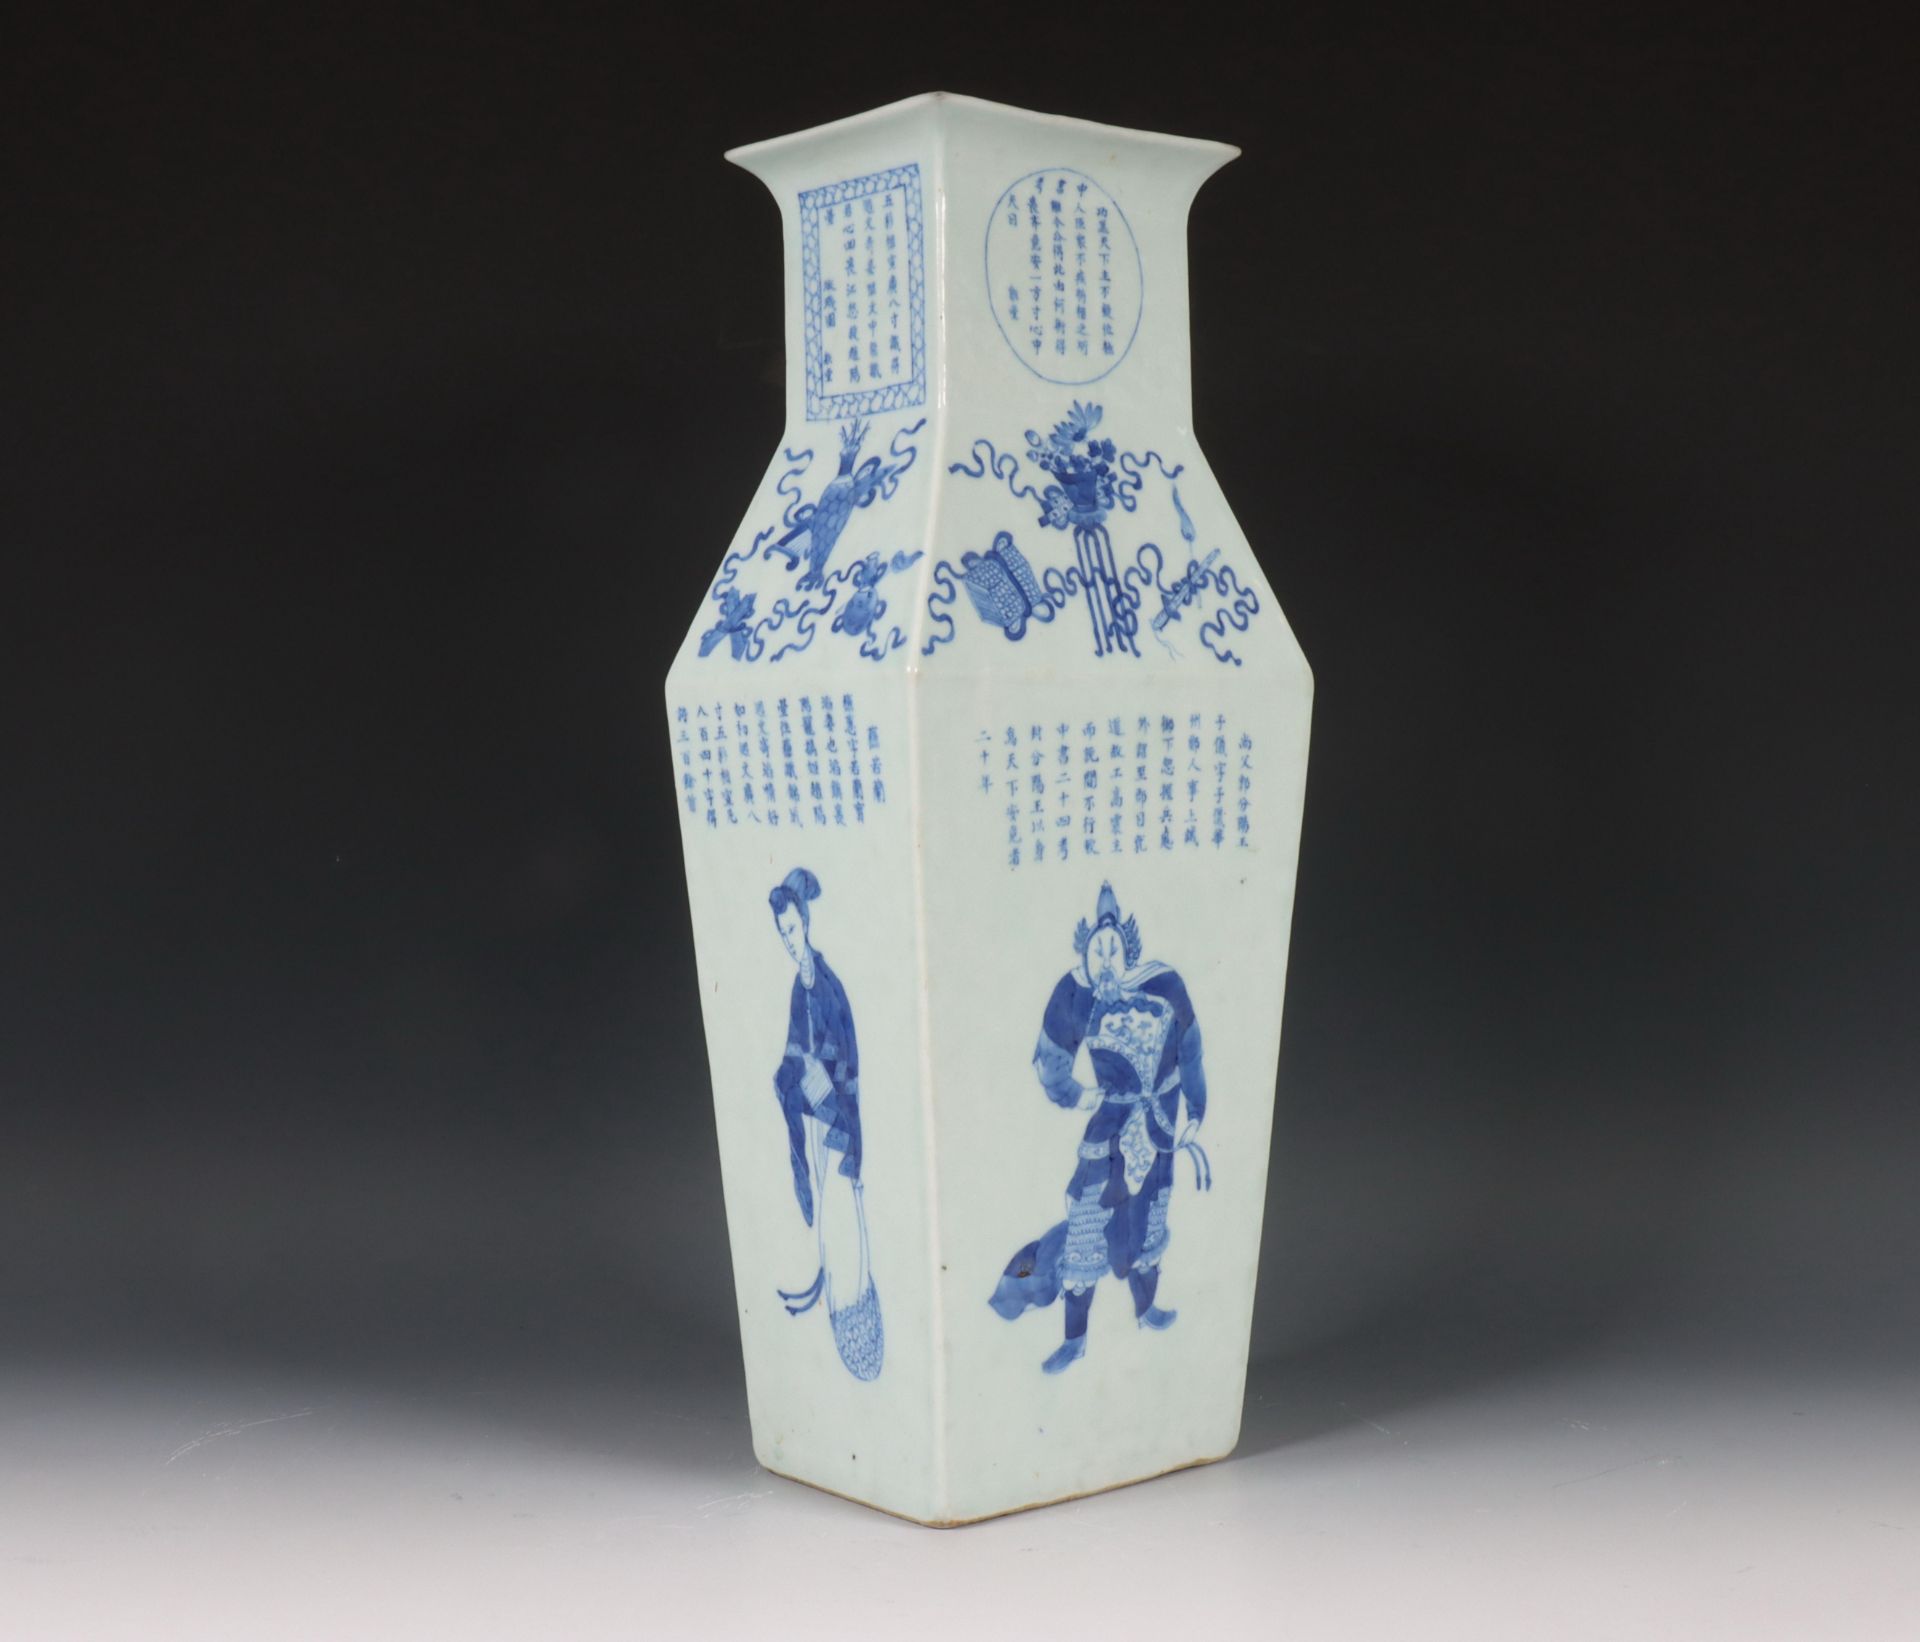 China, kantige blauw-wit porseleinen 'Wu Shuang Pu' vaas, laat Qing dynastie, eind 19e eeuw, - Bild 5 aus 10